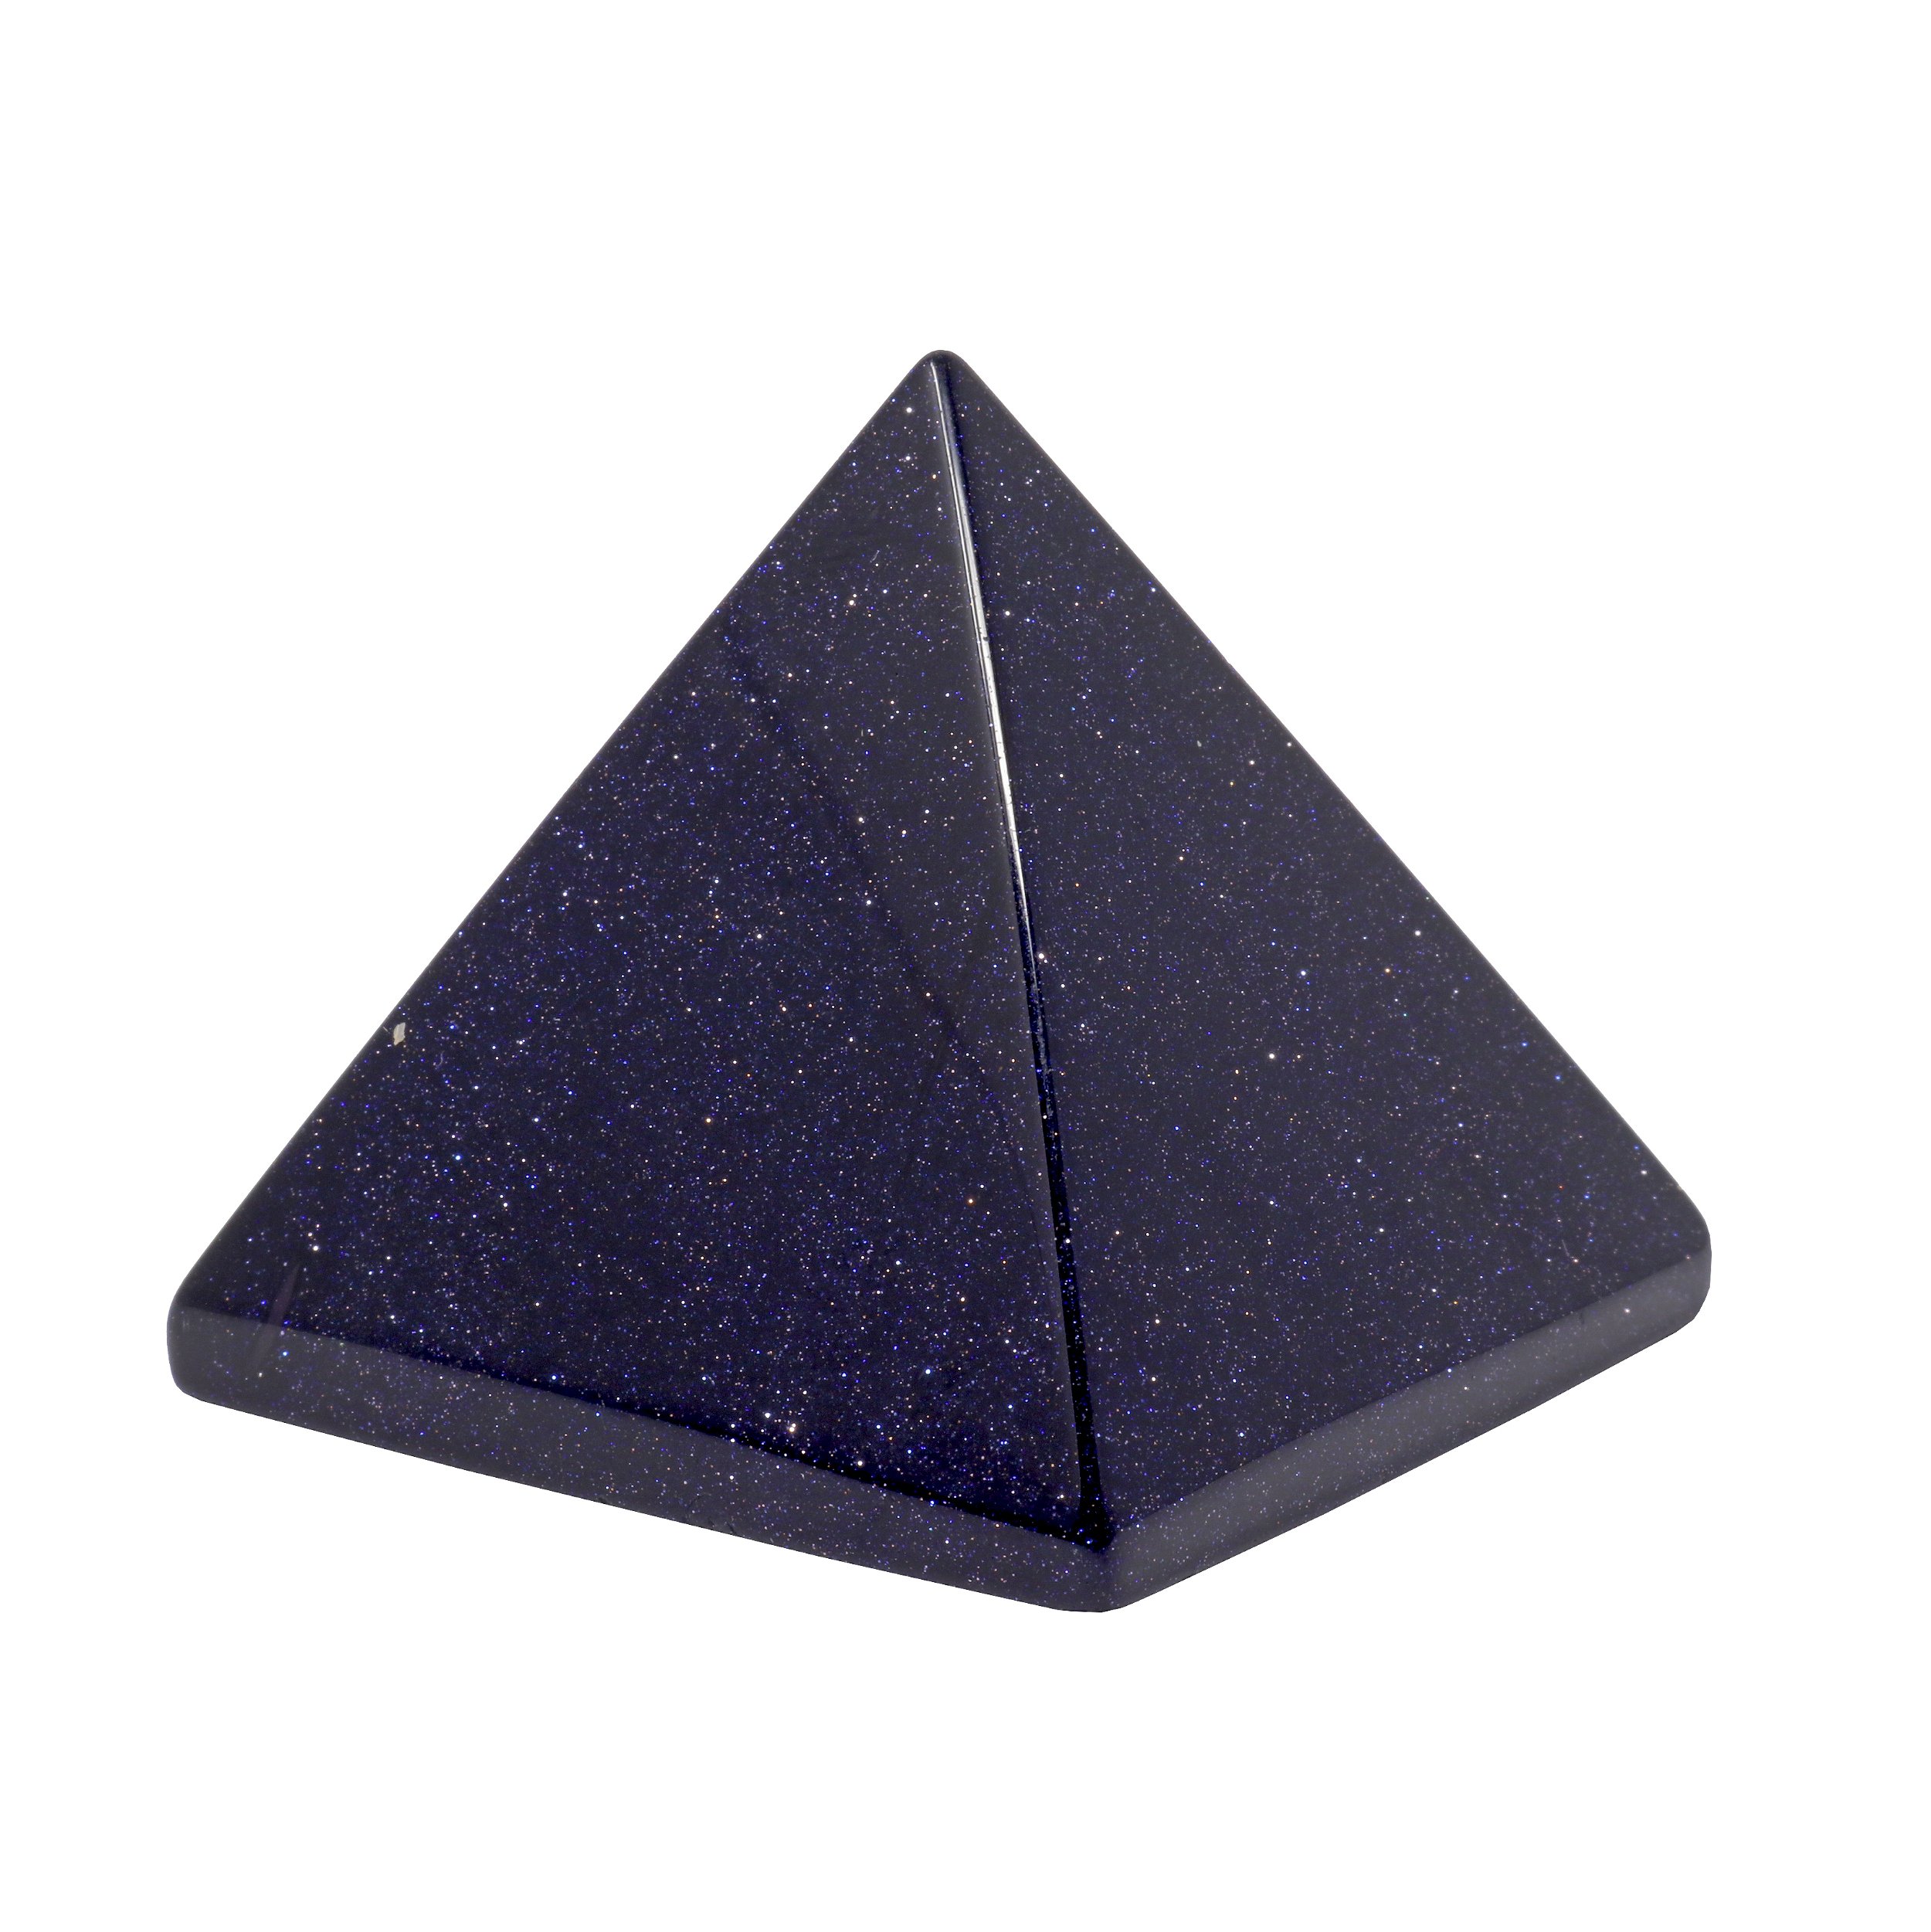 Blue Goldstone Pyramid - 45mm